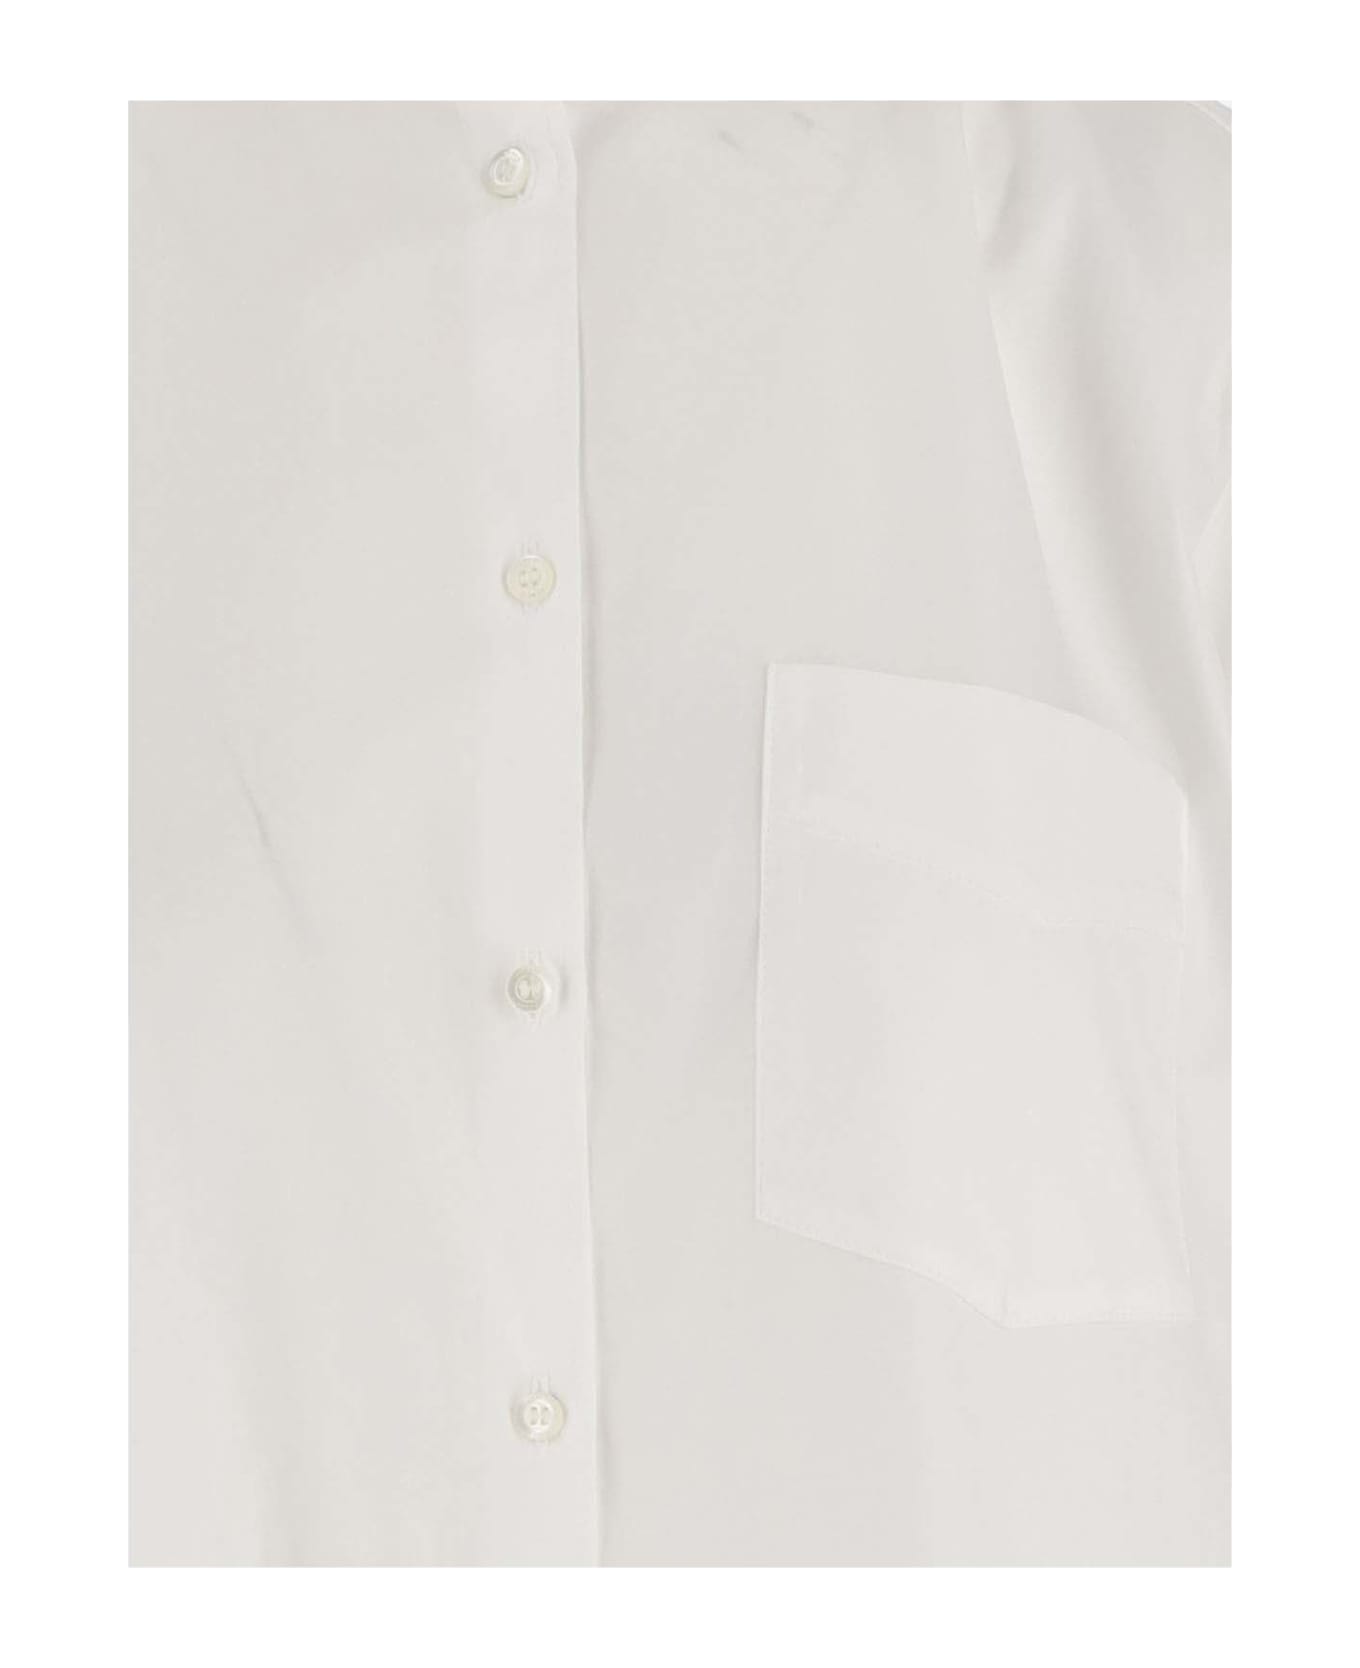 Aspesi Cotton Shirt - Bianco シャツ